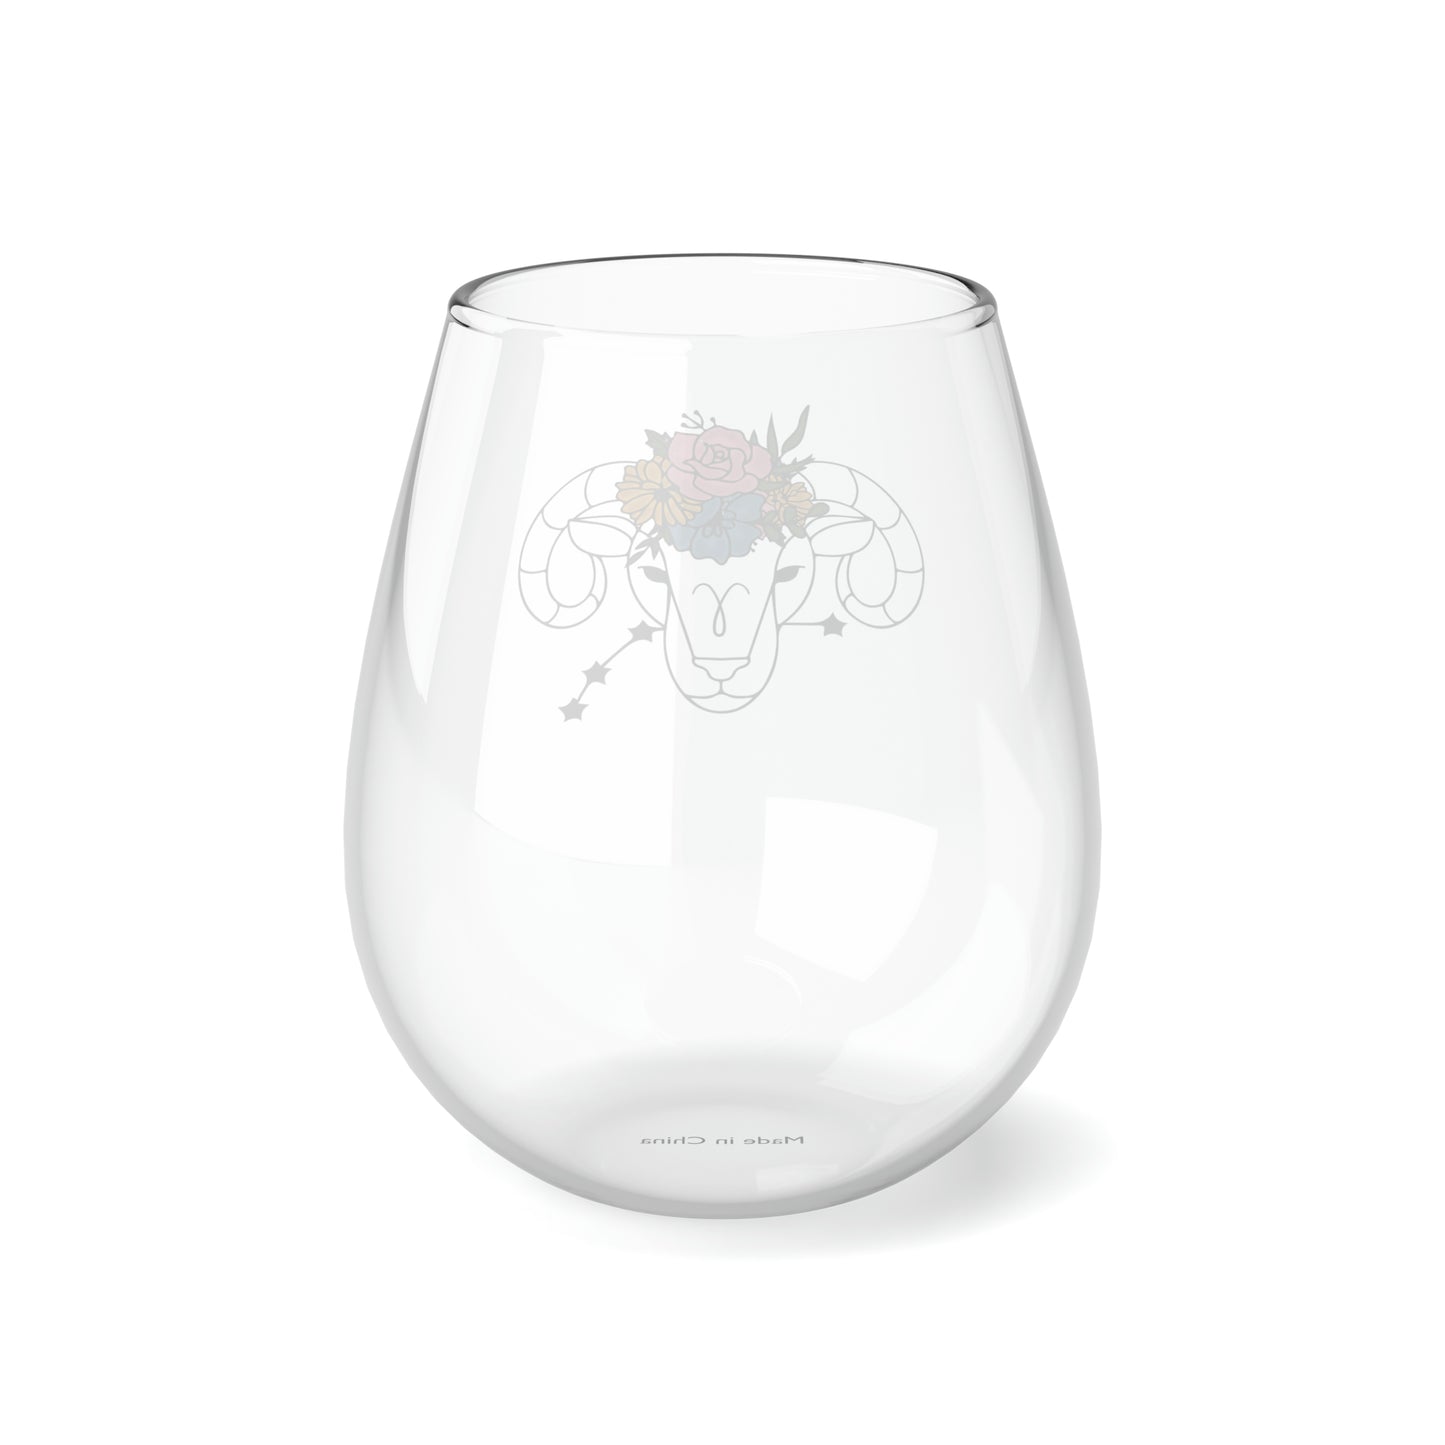 Aries Flowers and Stars Stemless Wine Glass, 11.75oz